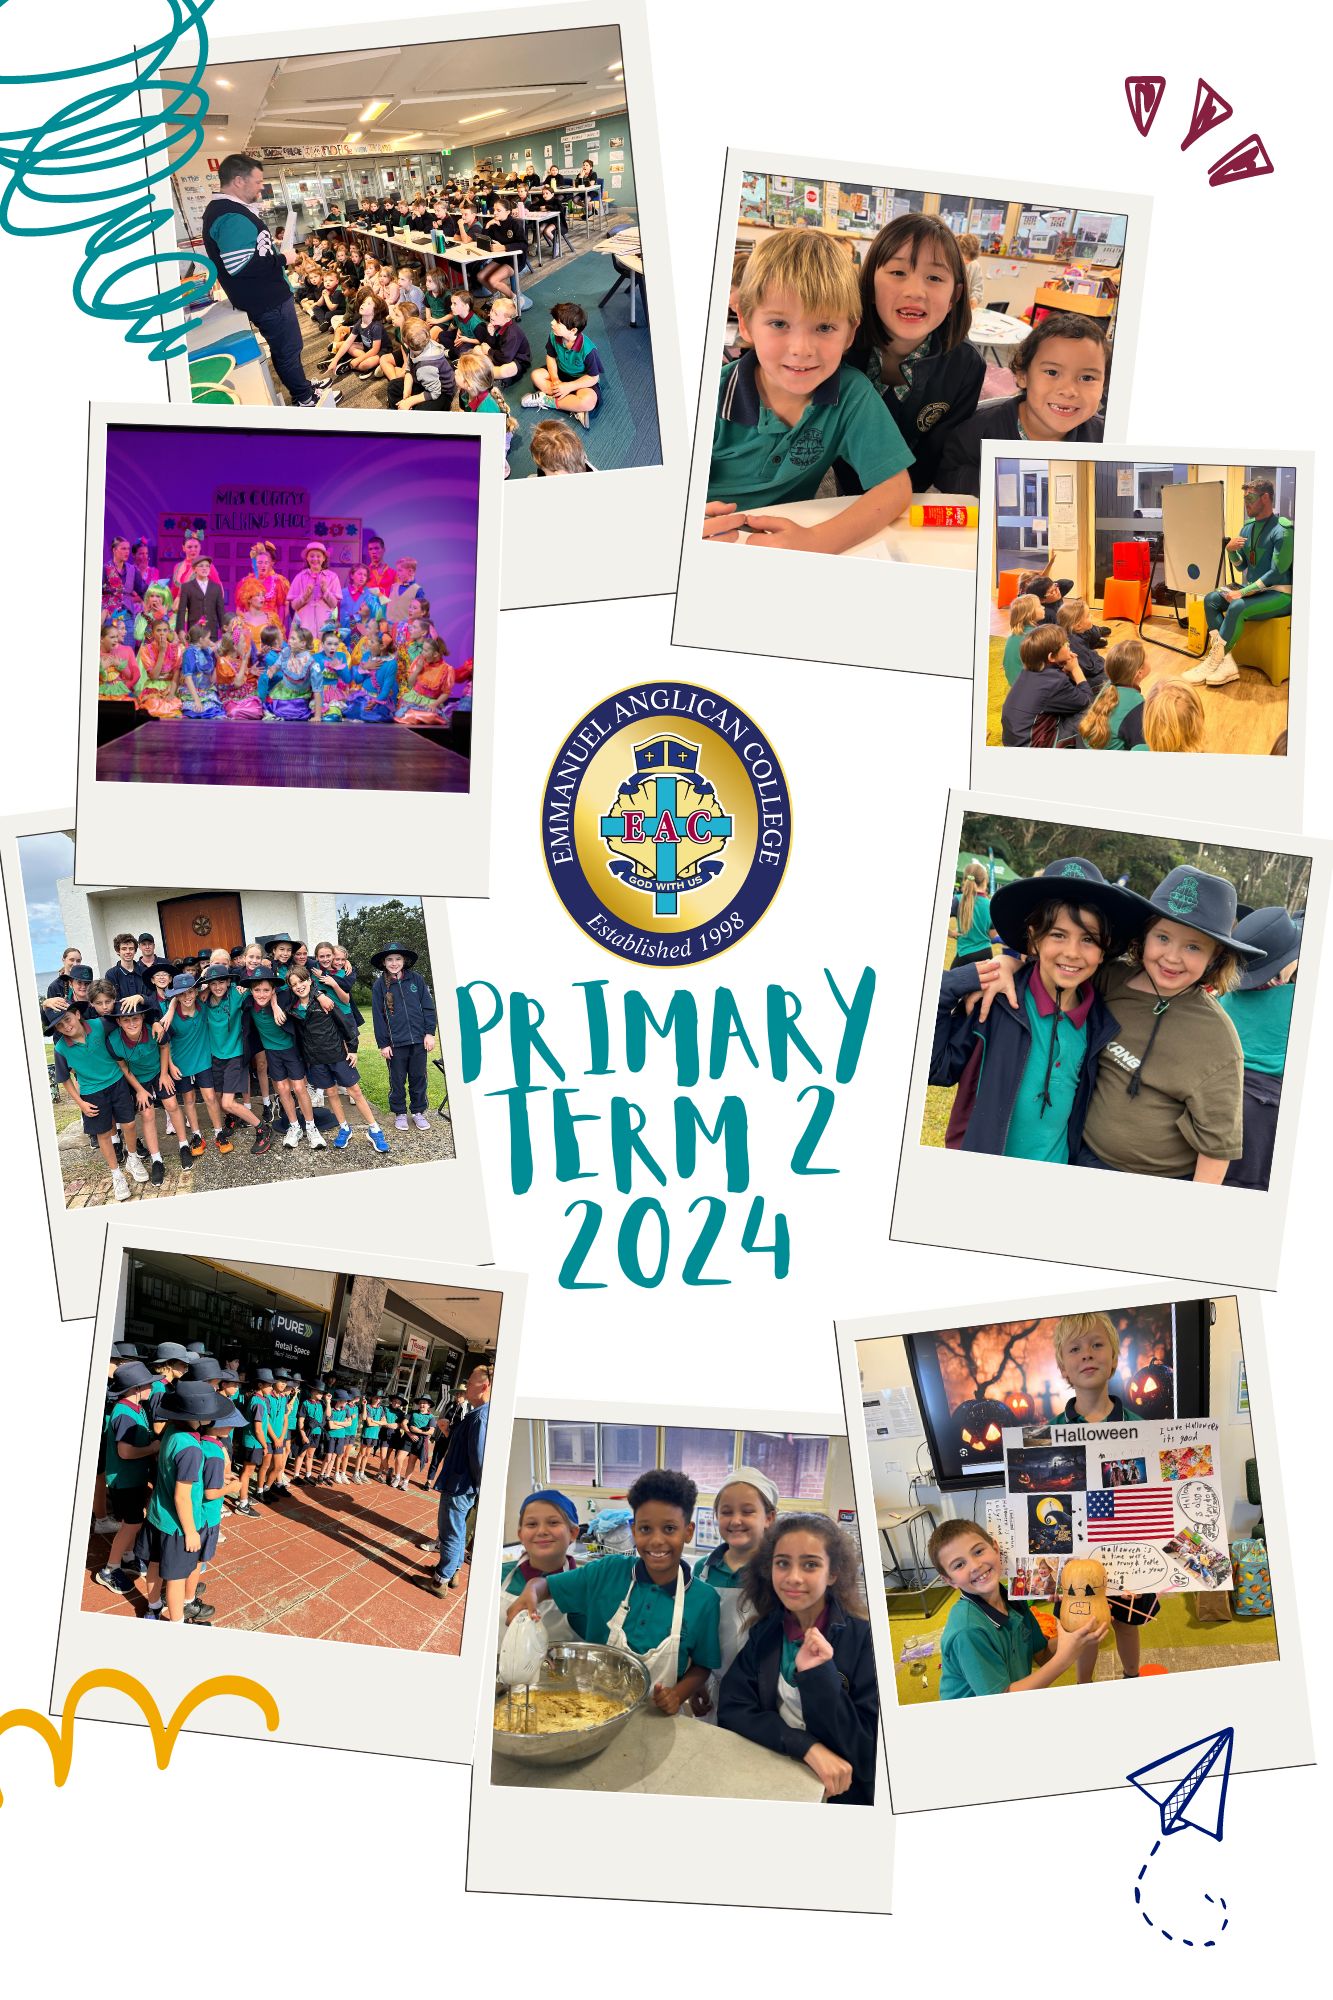 Temr 2 Primary Photo Collage